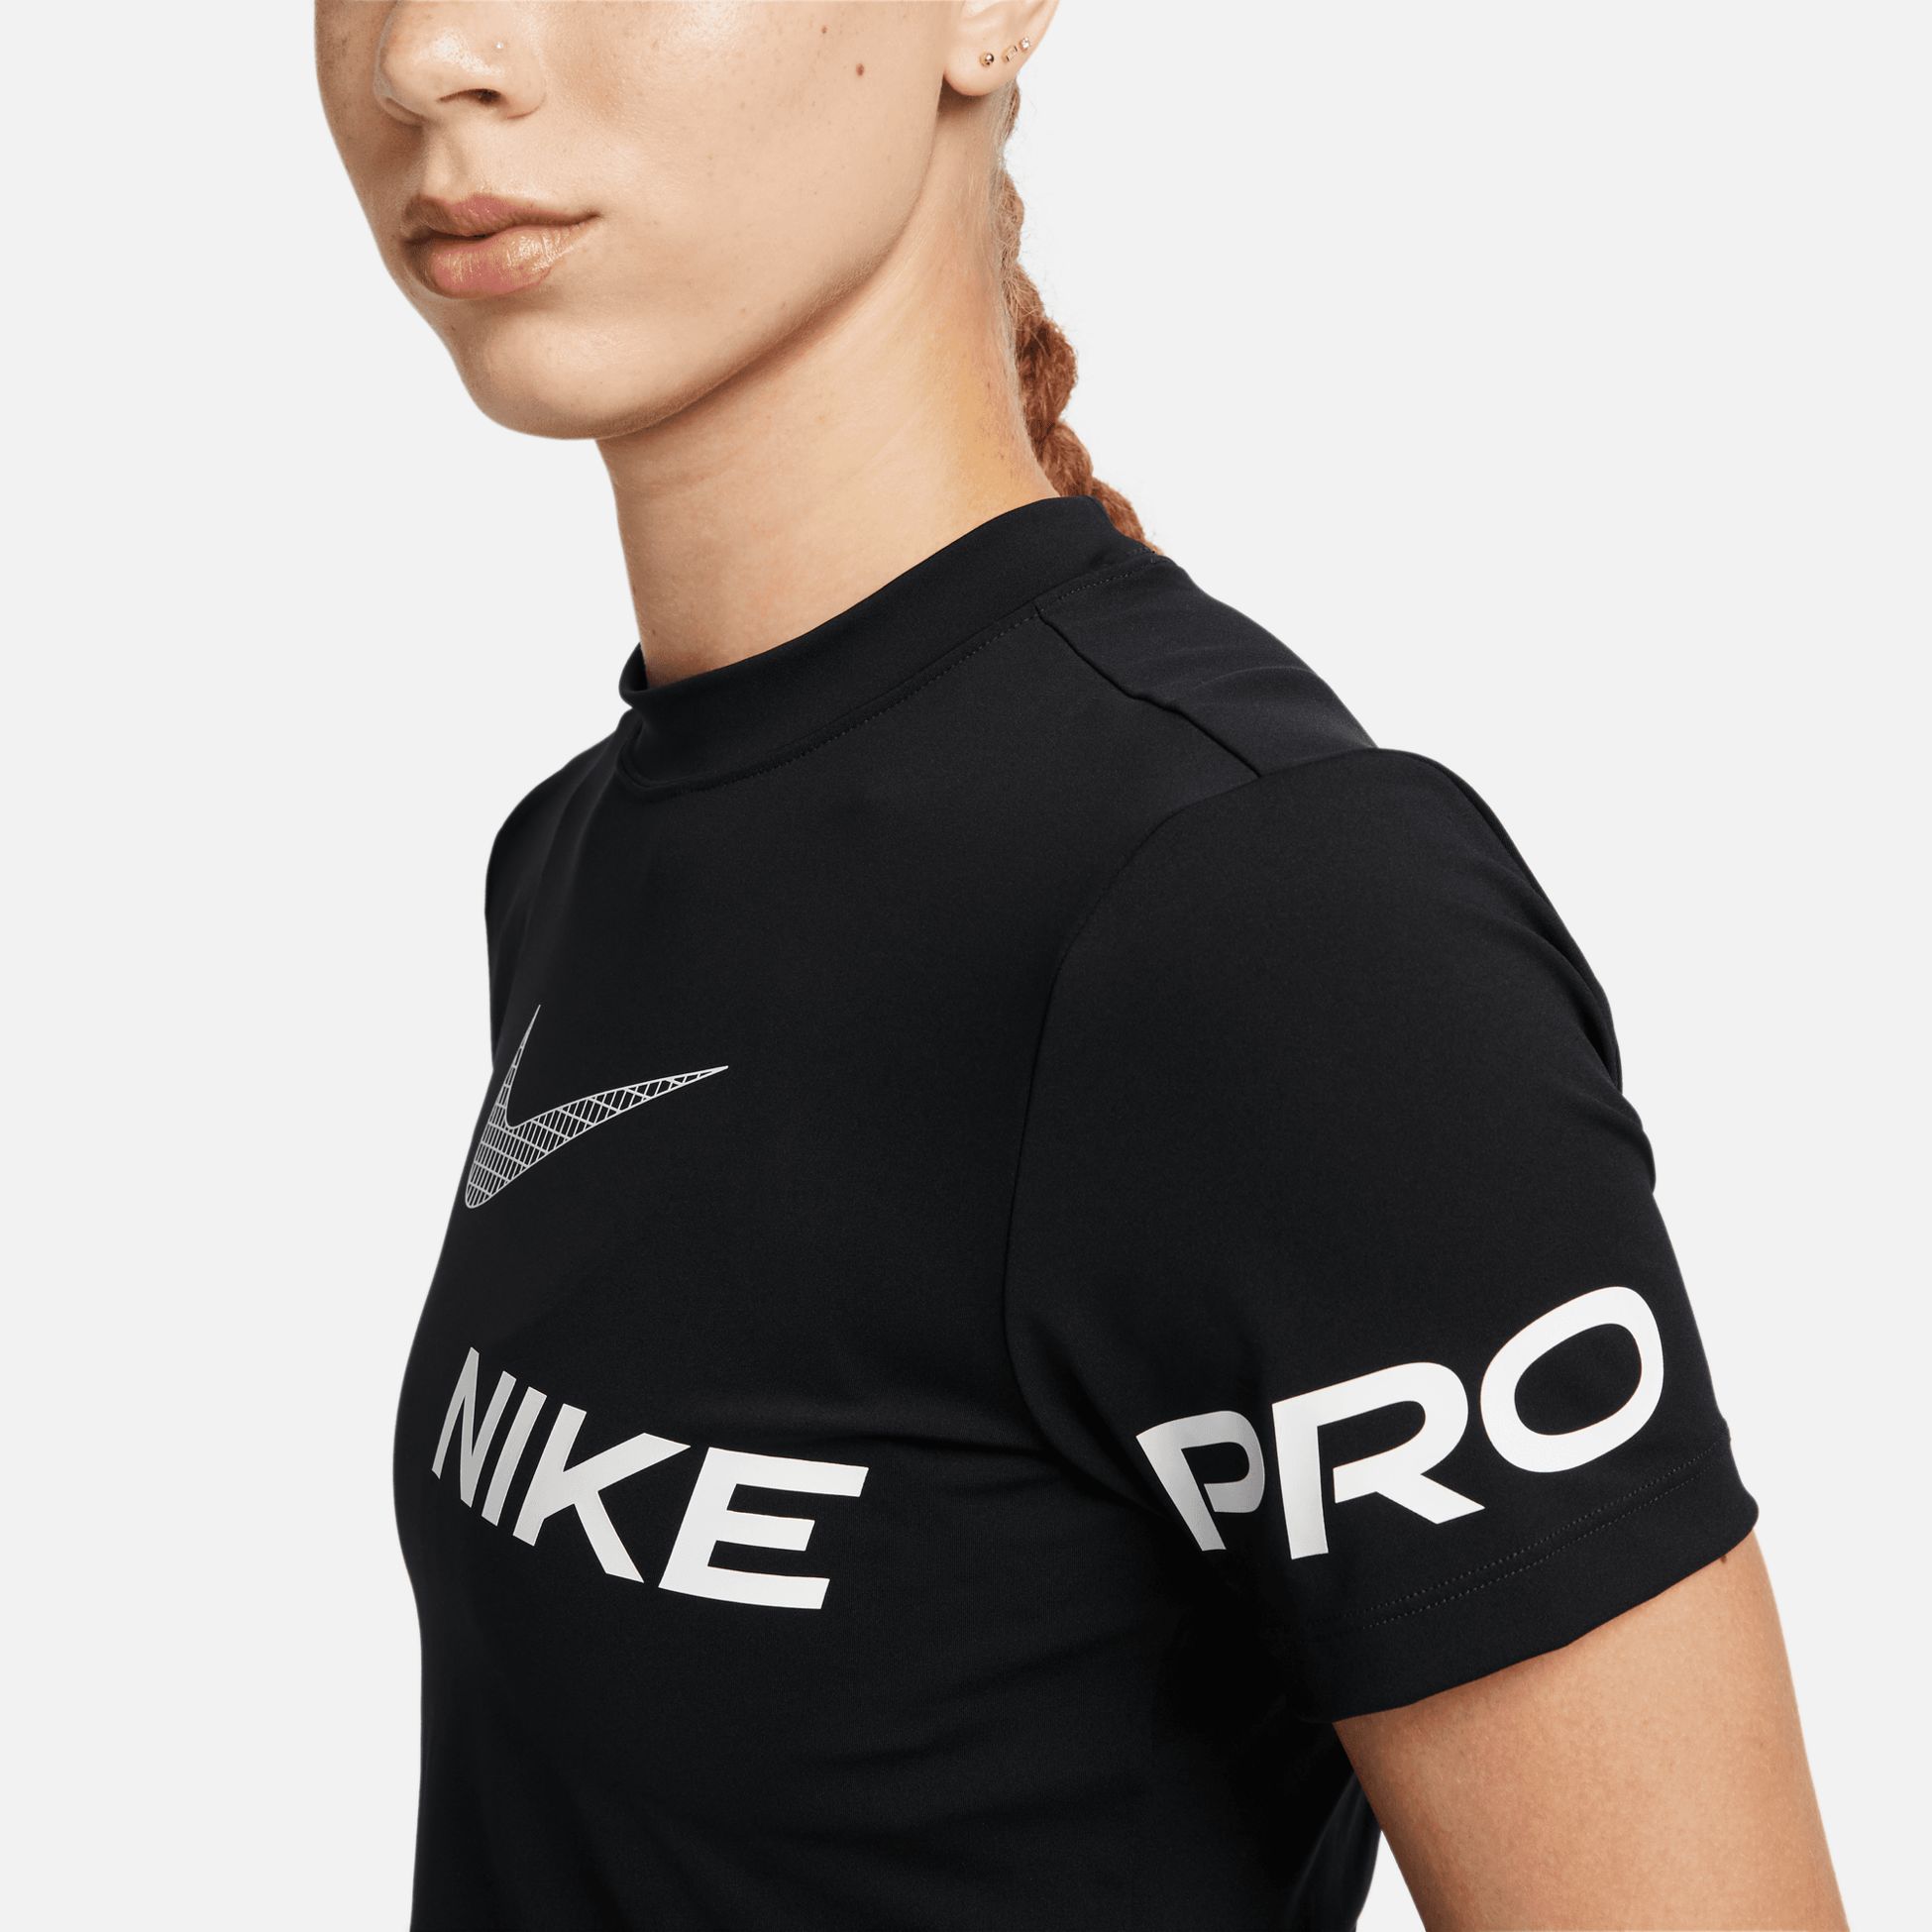 NIKE, NikePro Dri-FIT Women's Short Sleev